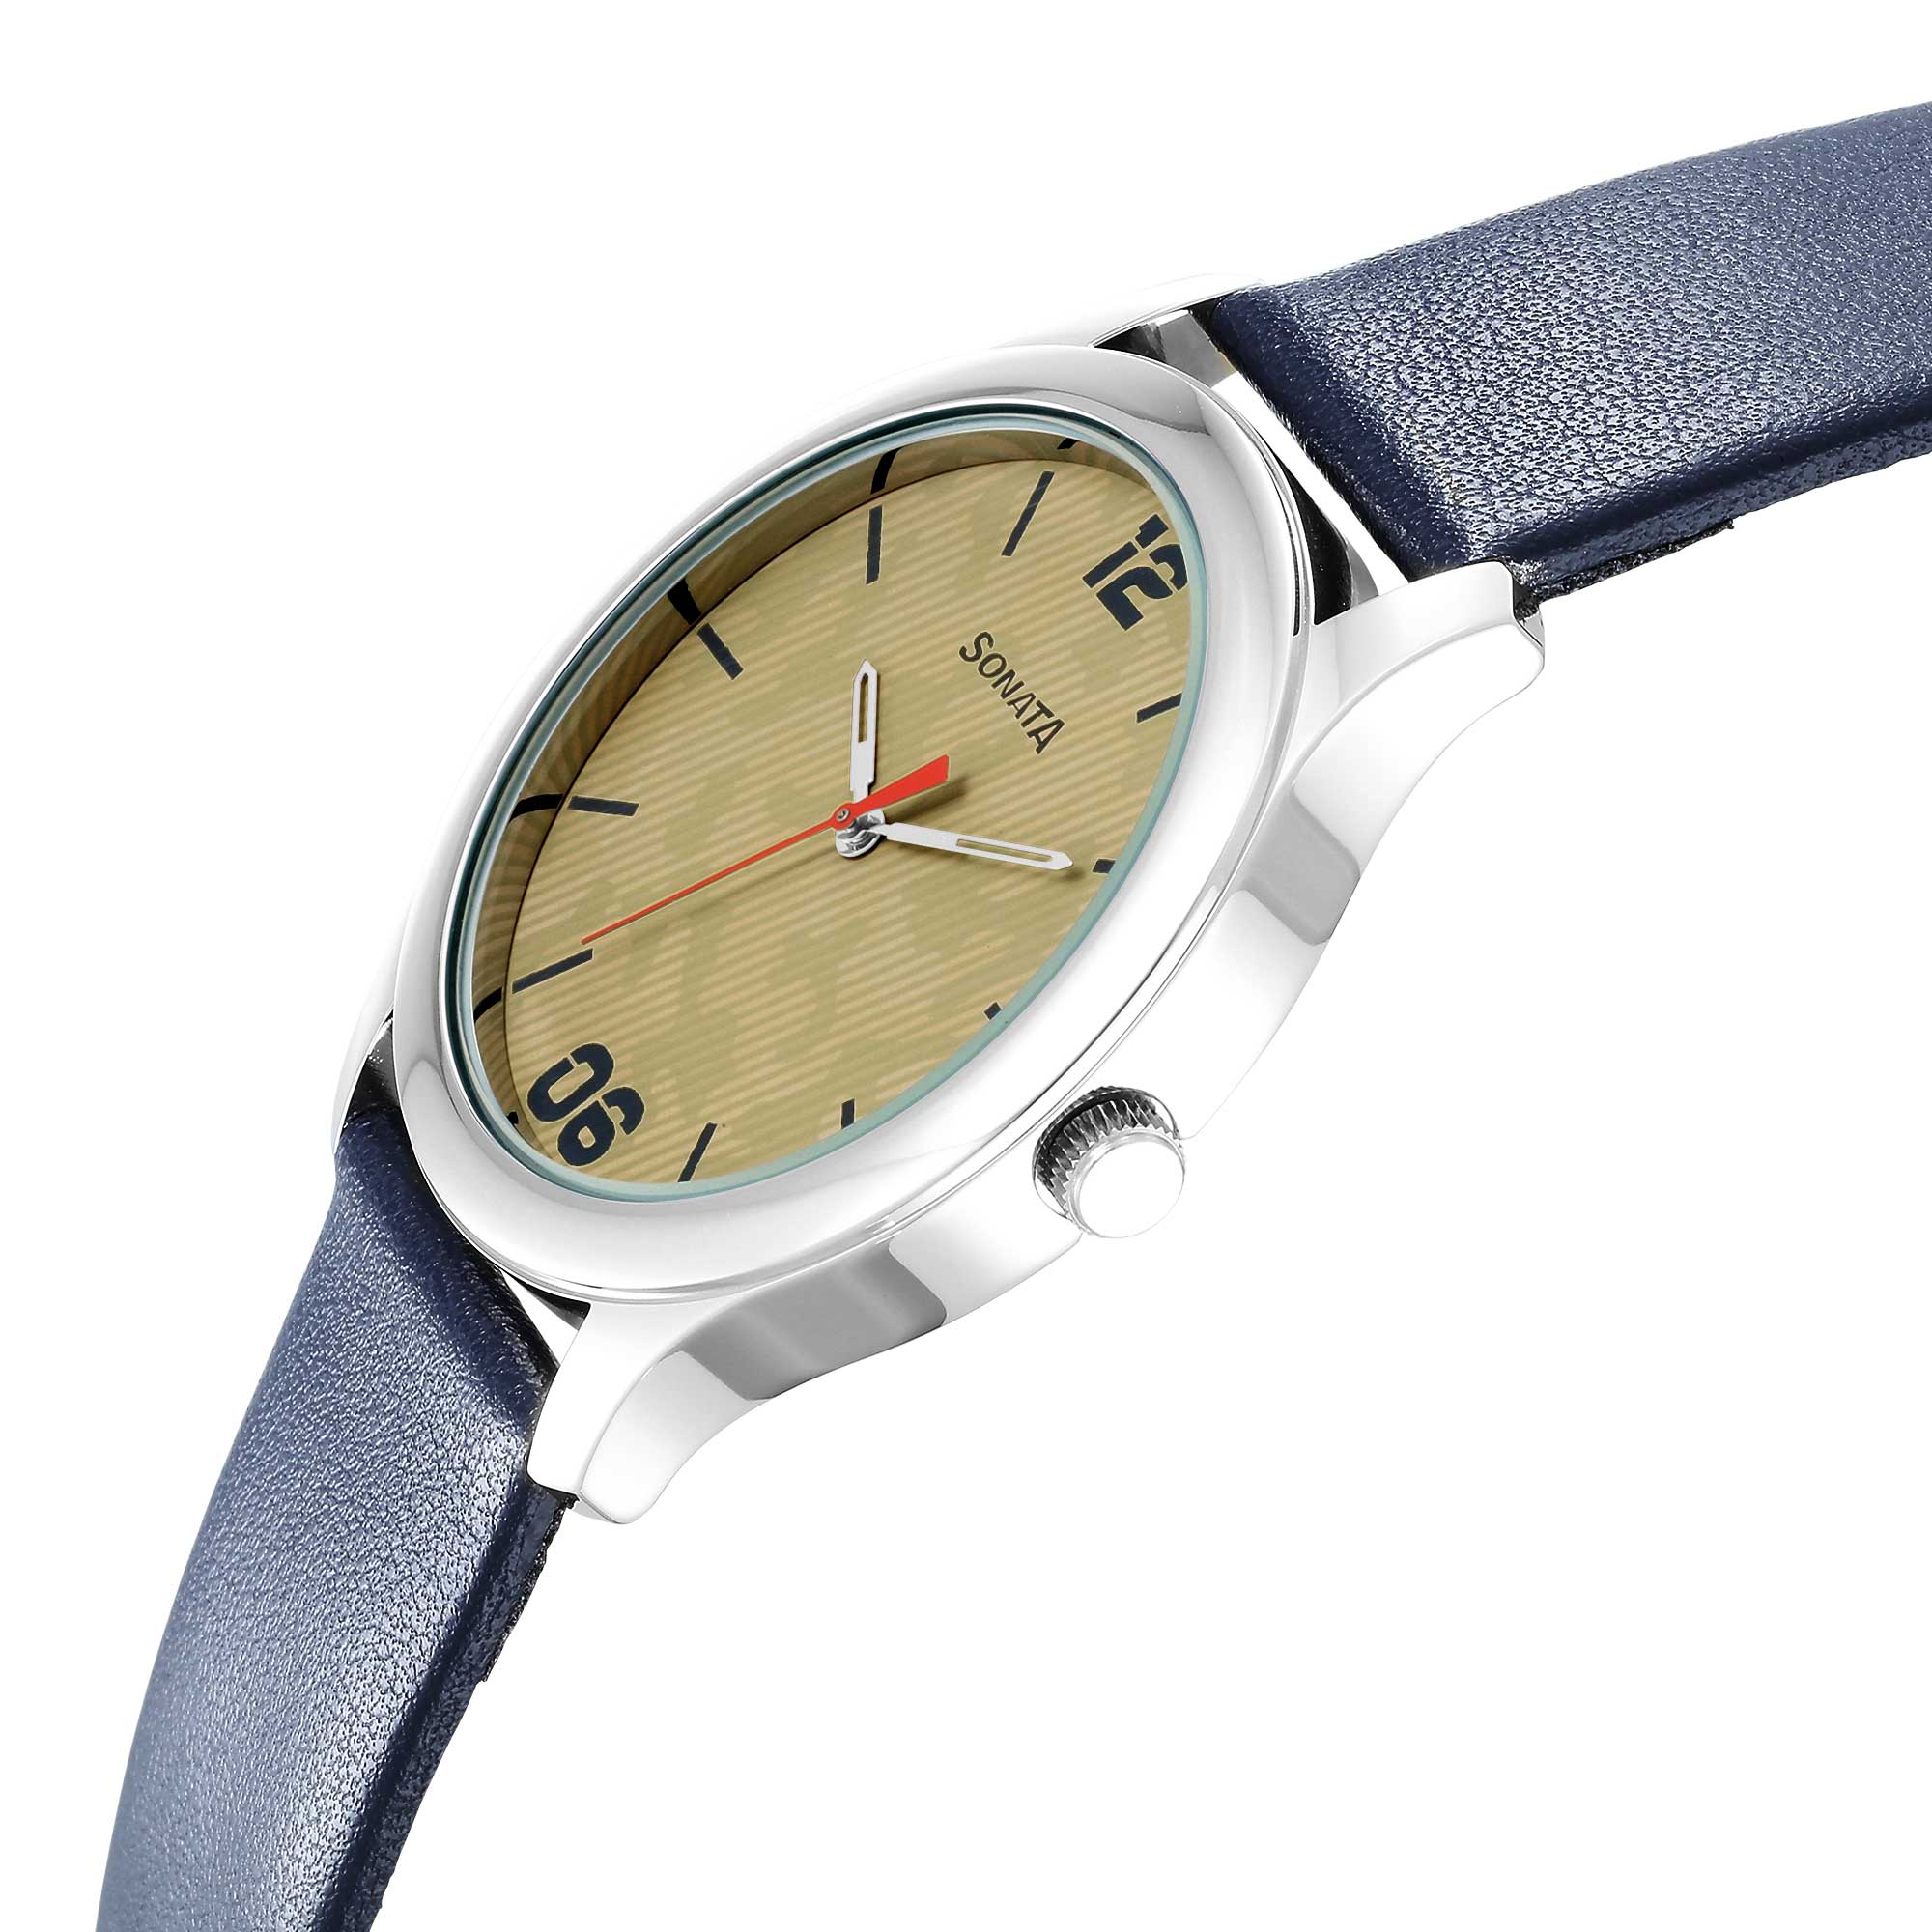 Sonata Quartz Analog Multicoloured Dial Leather Strap Watch for Men